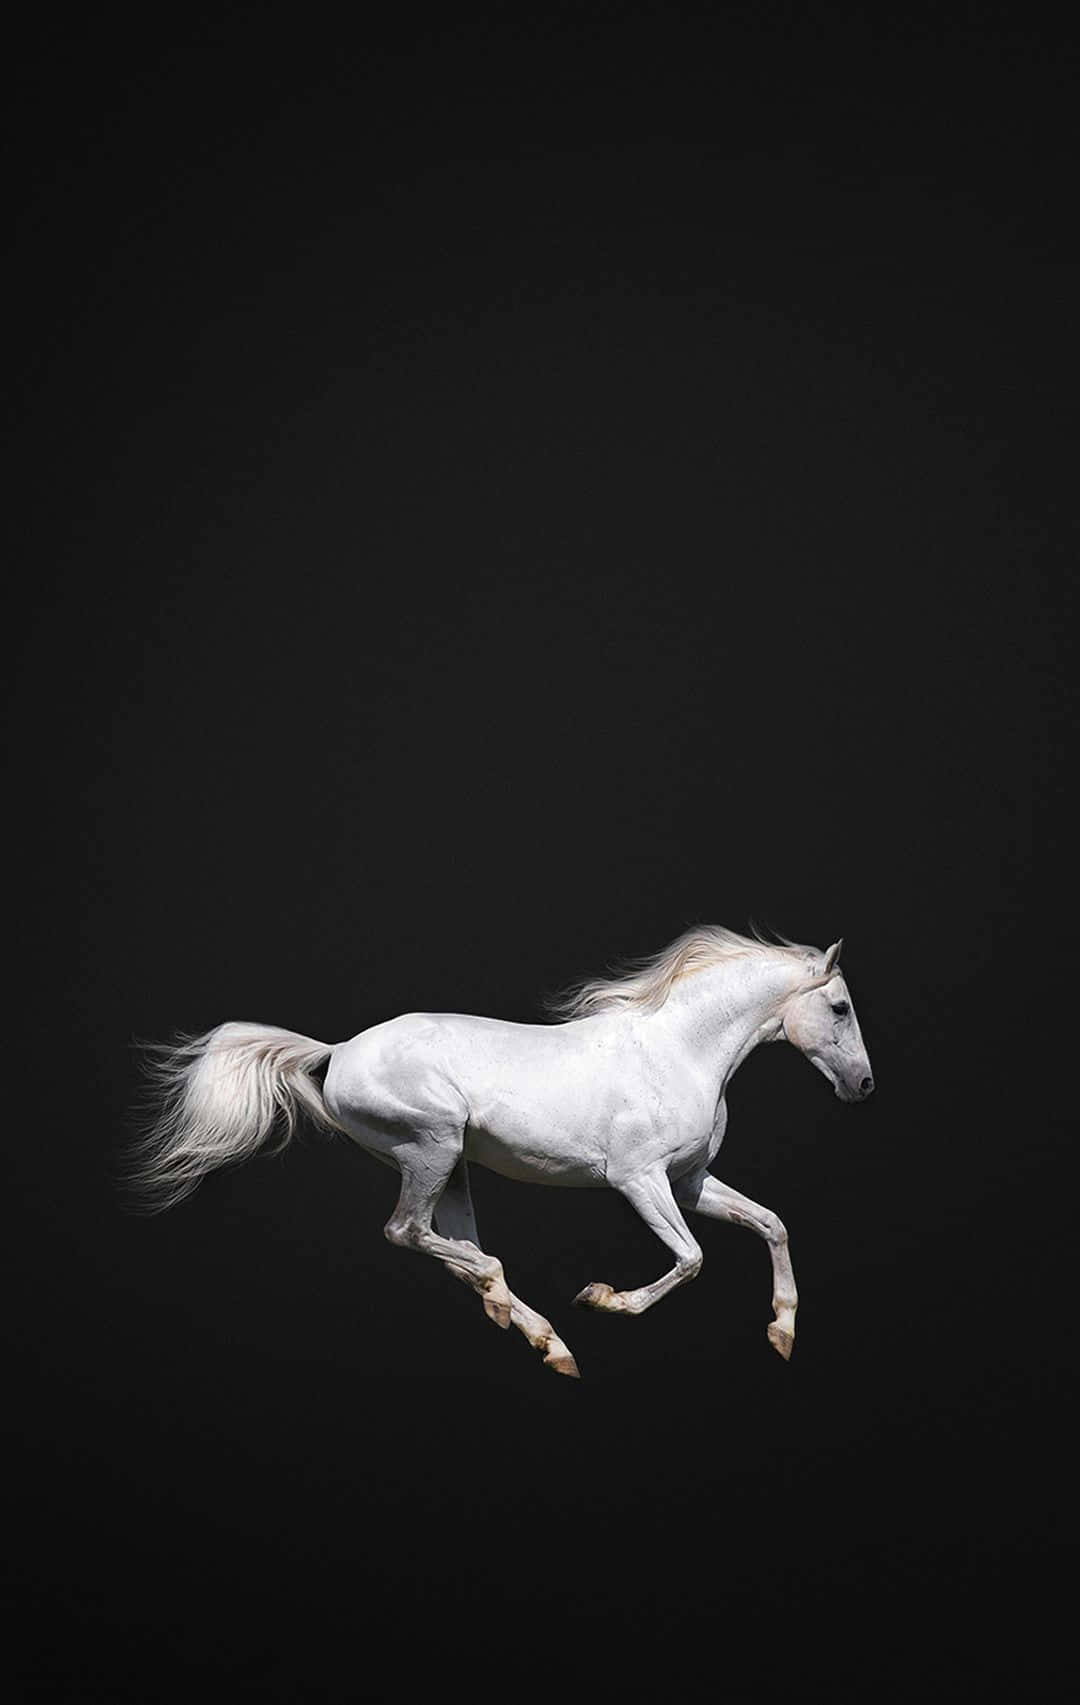 "A beautiful, majestic horse running in a sunlit field" Wallpaper